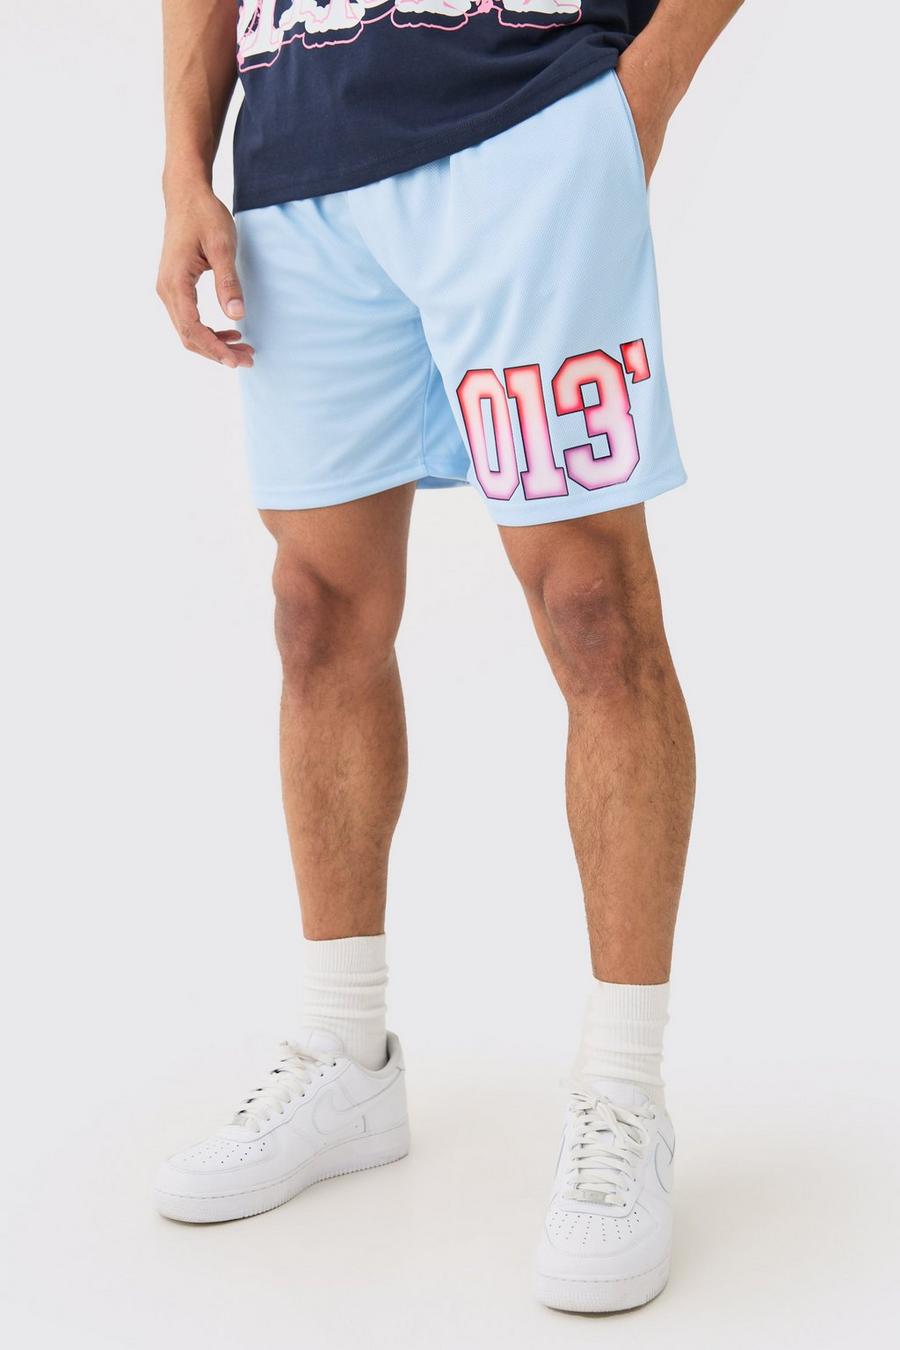 Pantalón corto de baloncesto de malla con estampado lateral, Aqua